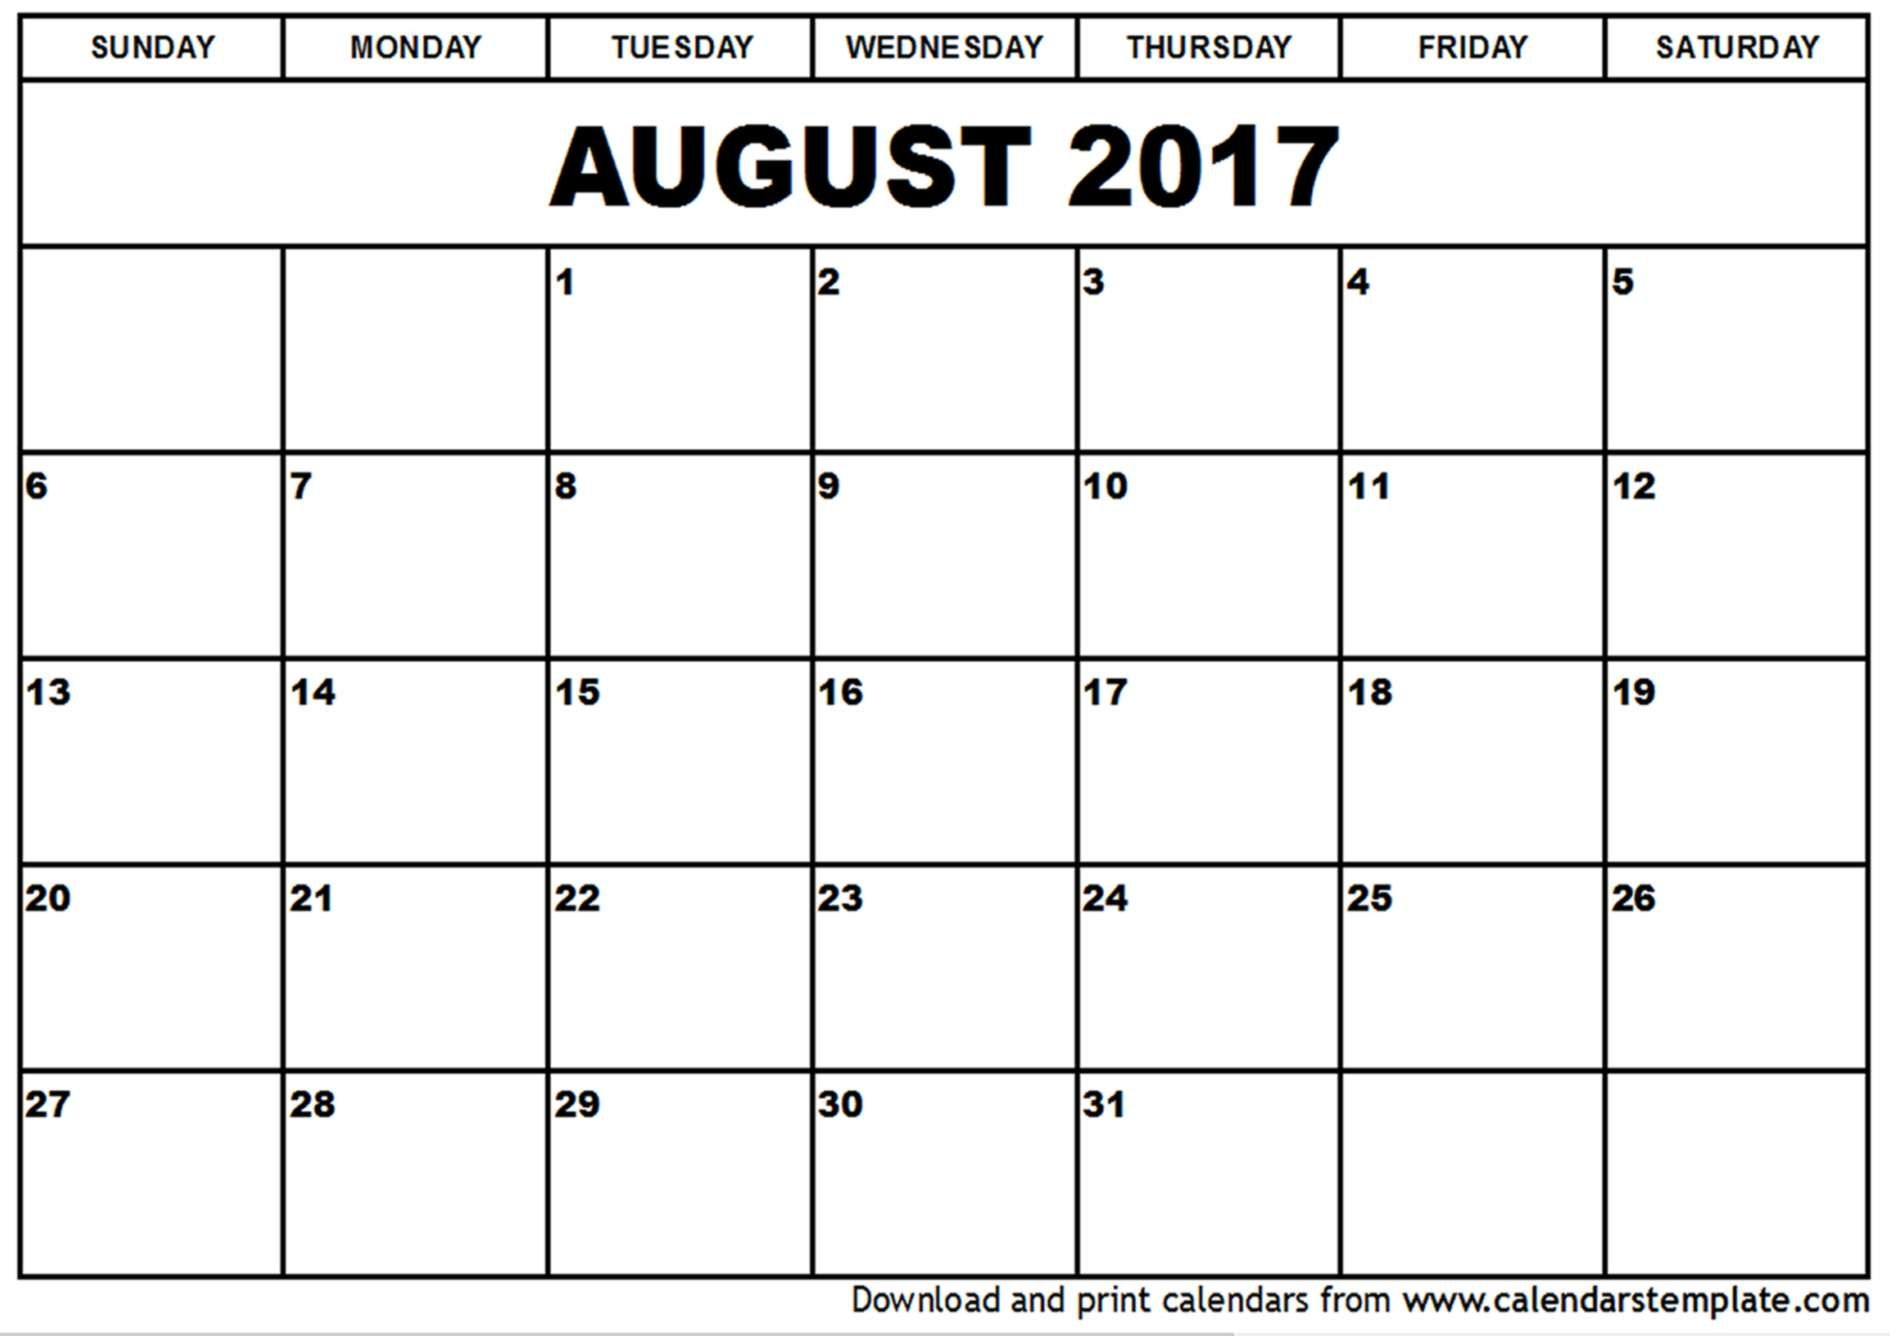 August 2017 Printable Calendar | August 2017 Calendar | Pinterest - Free Printable August 2017